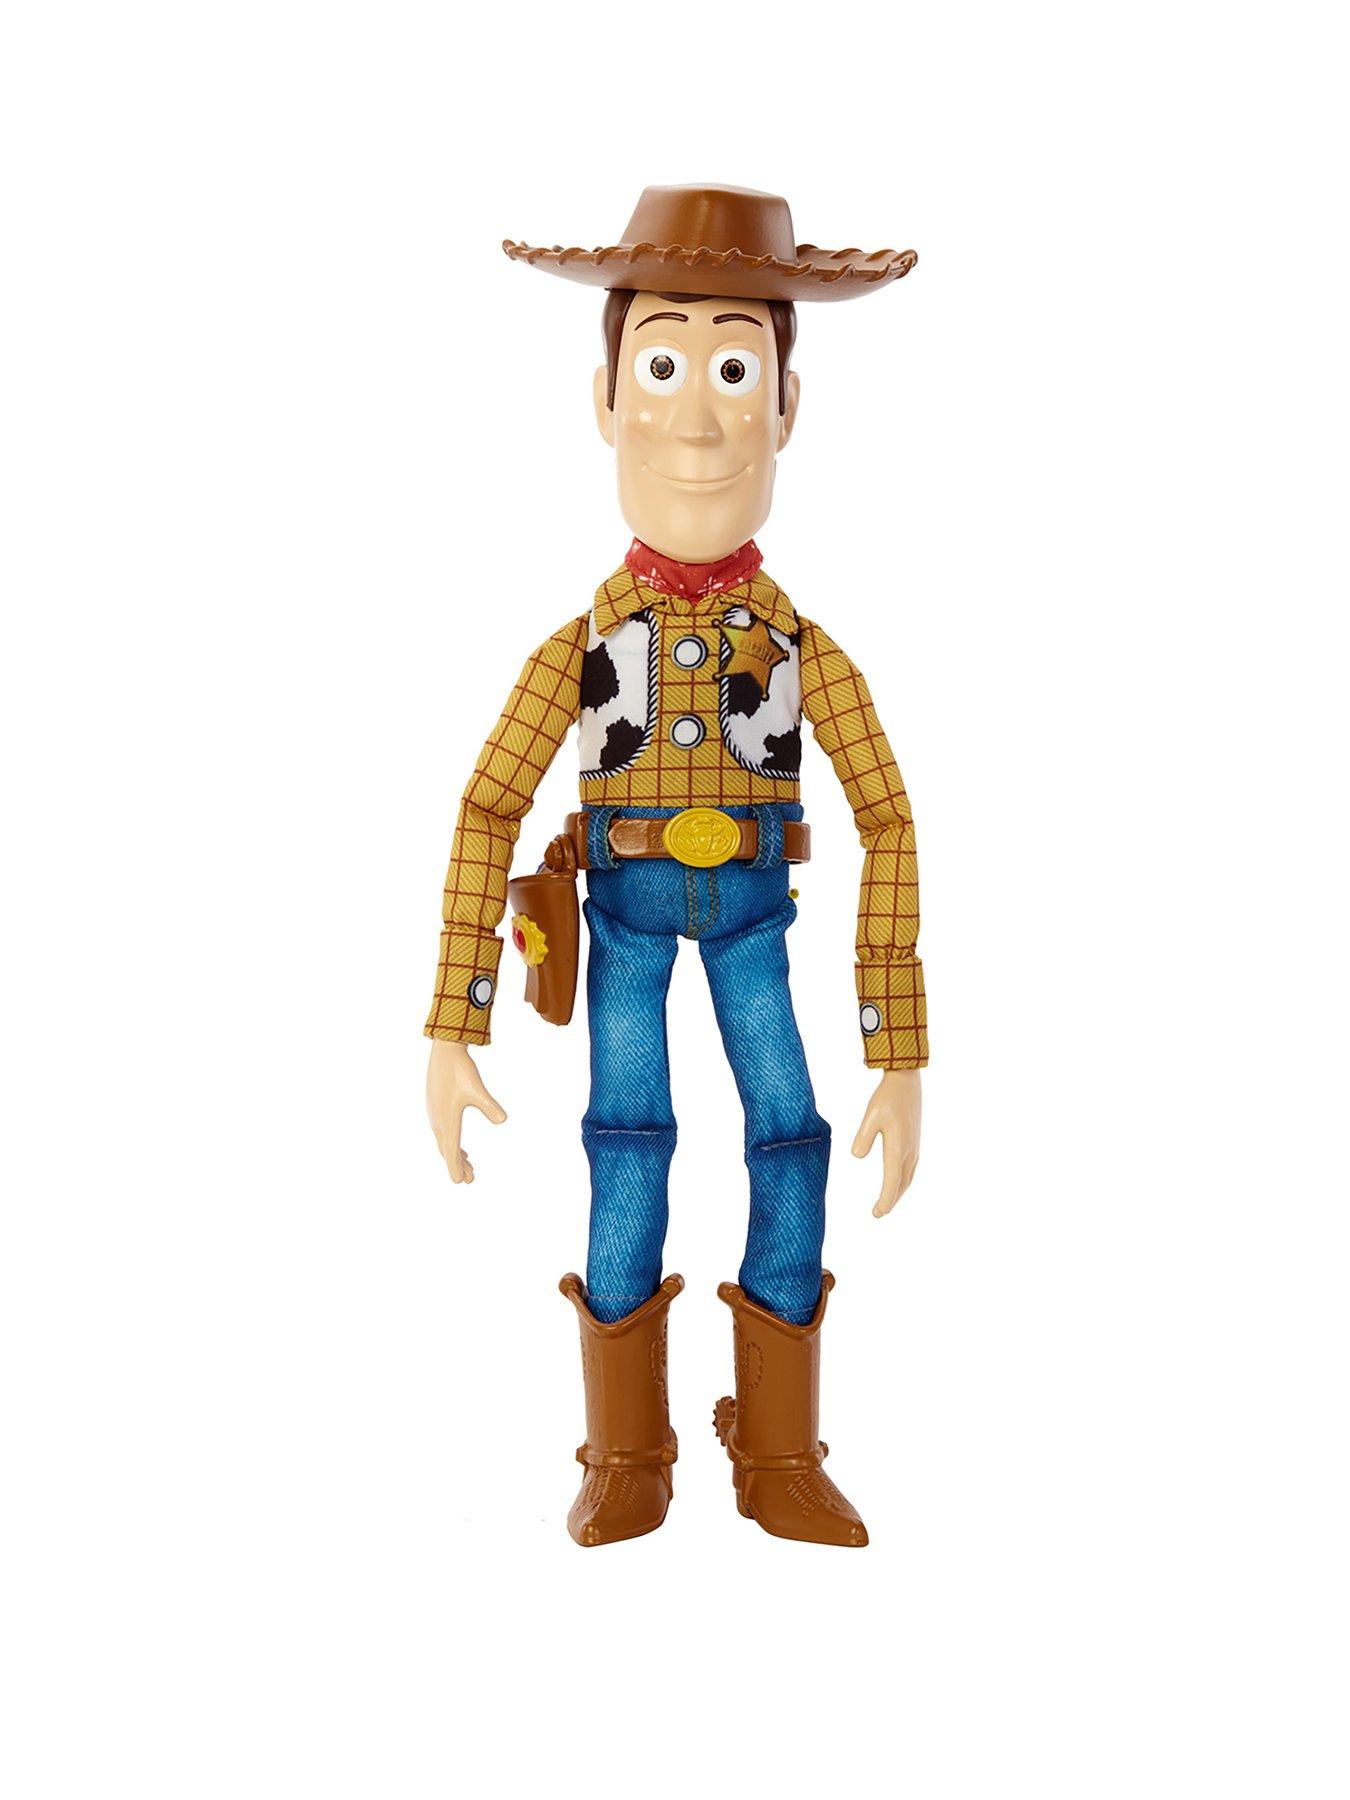 Toy Story Disney Big Face Zip-Up Hoodies -Buzz Lightyear, Sheriff Woody -  Boys